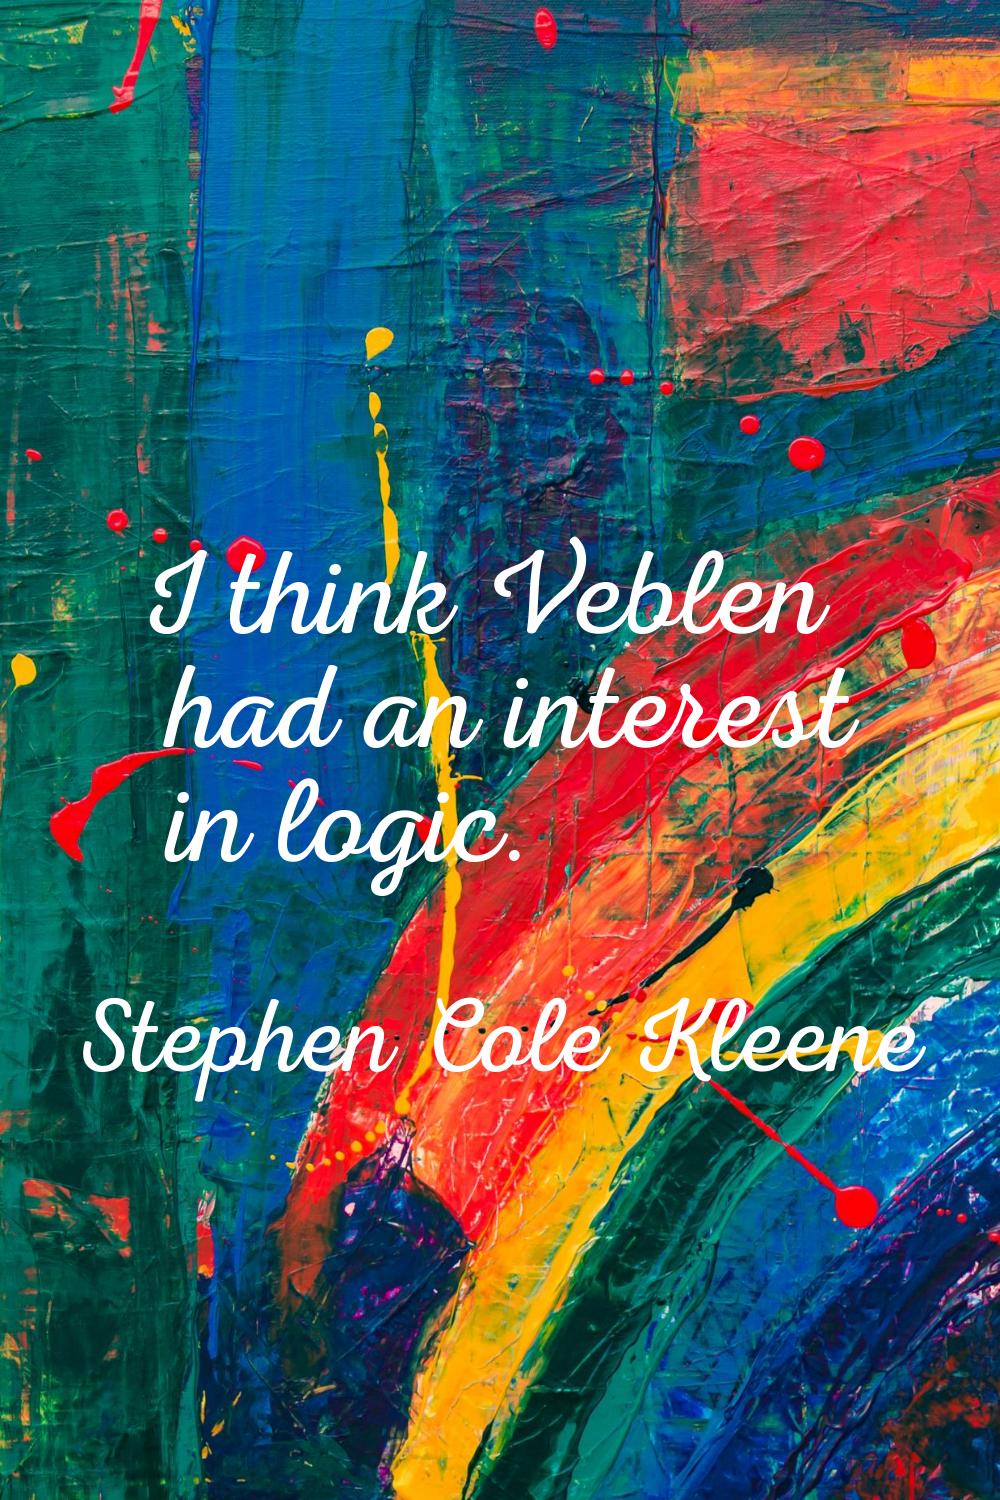 I think Veblen had an interest in logic.